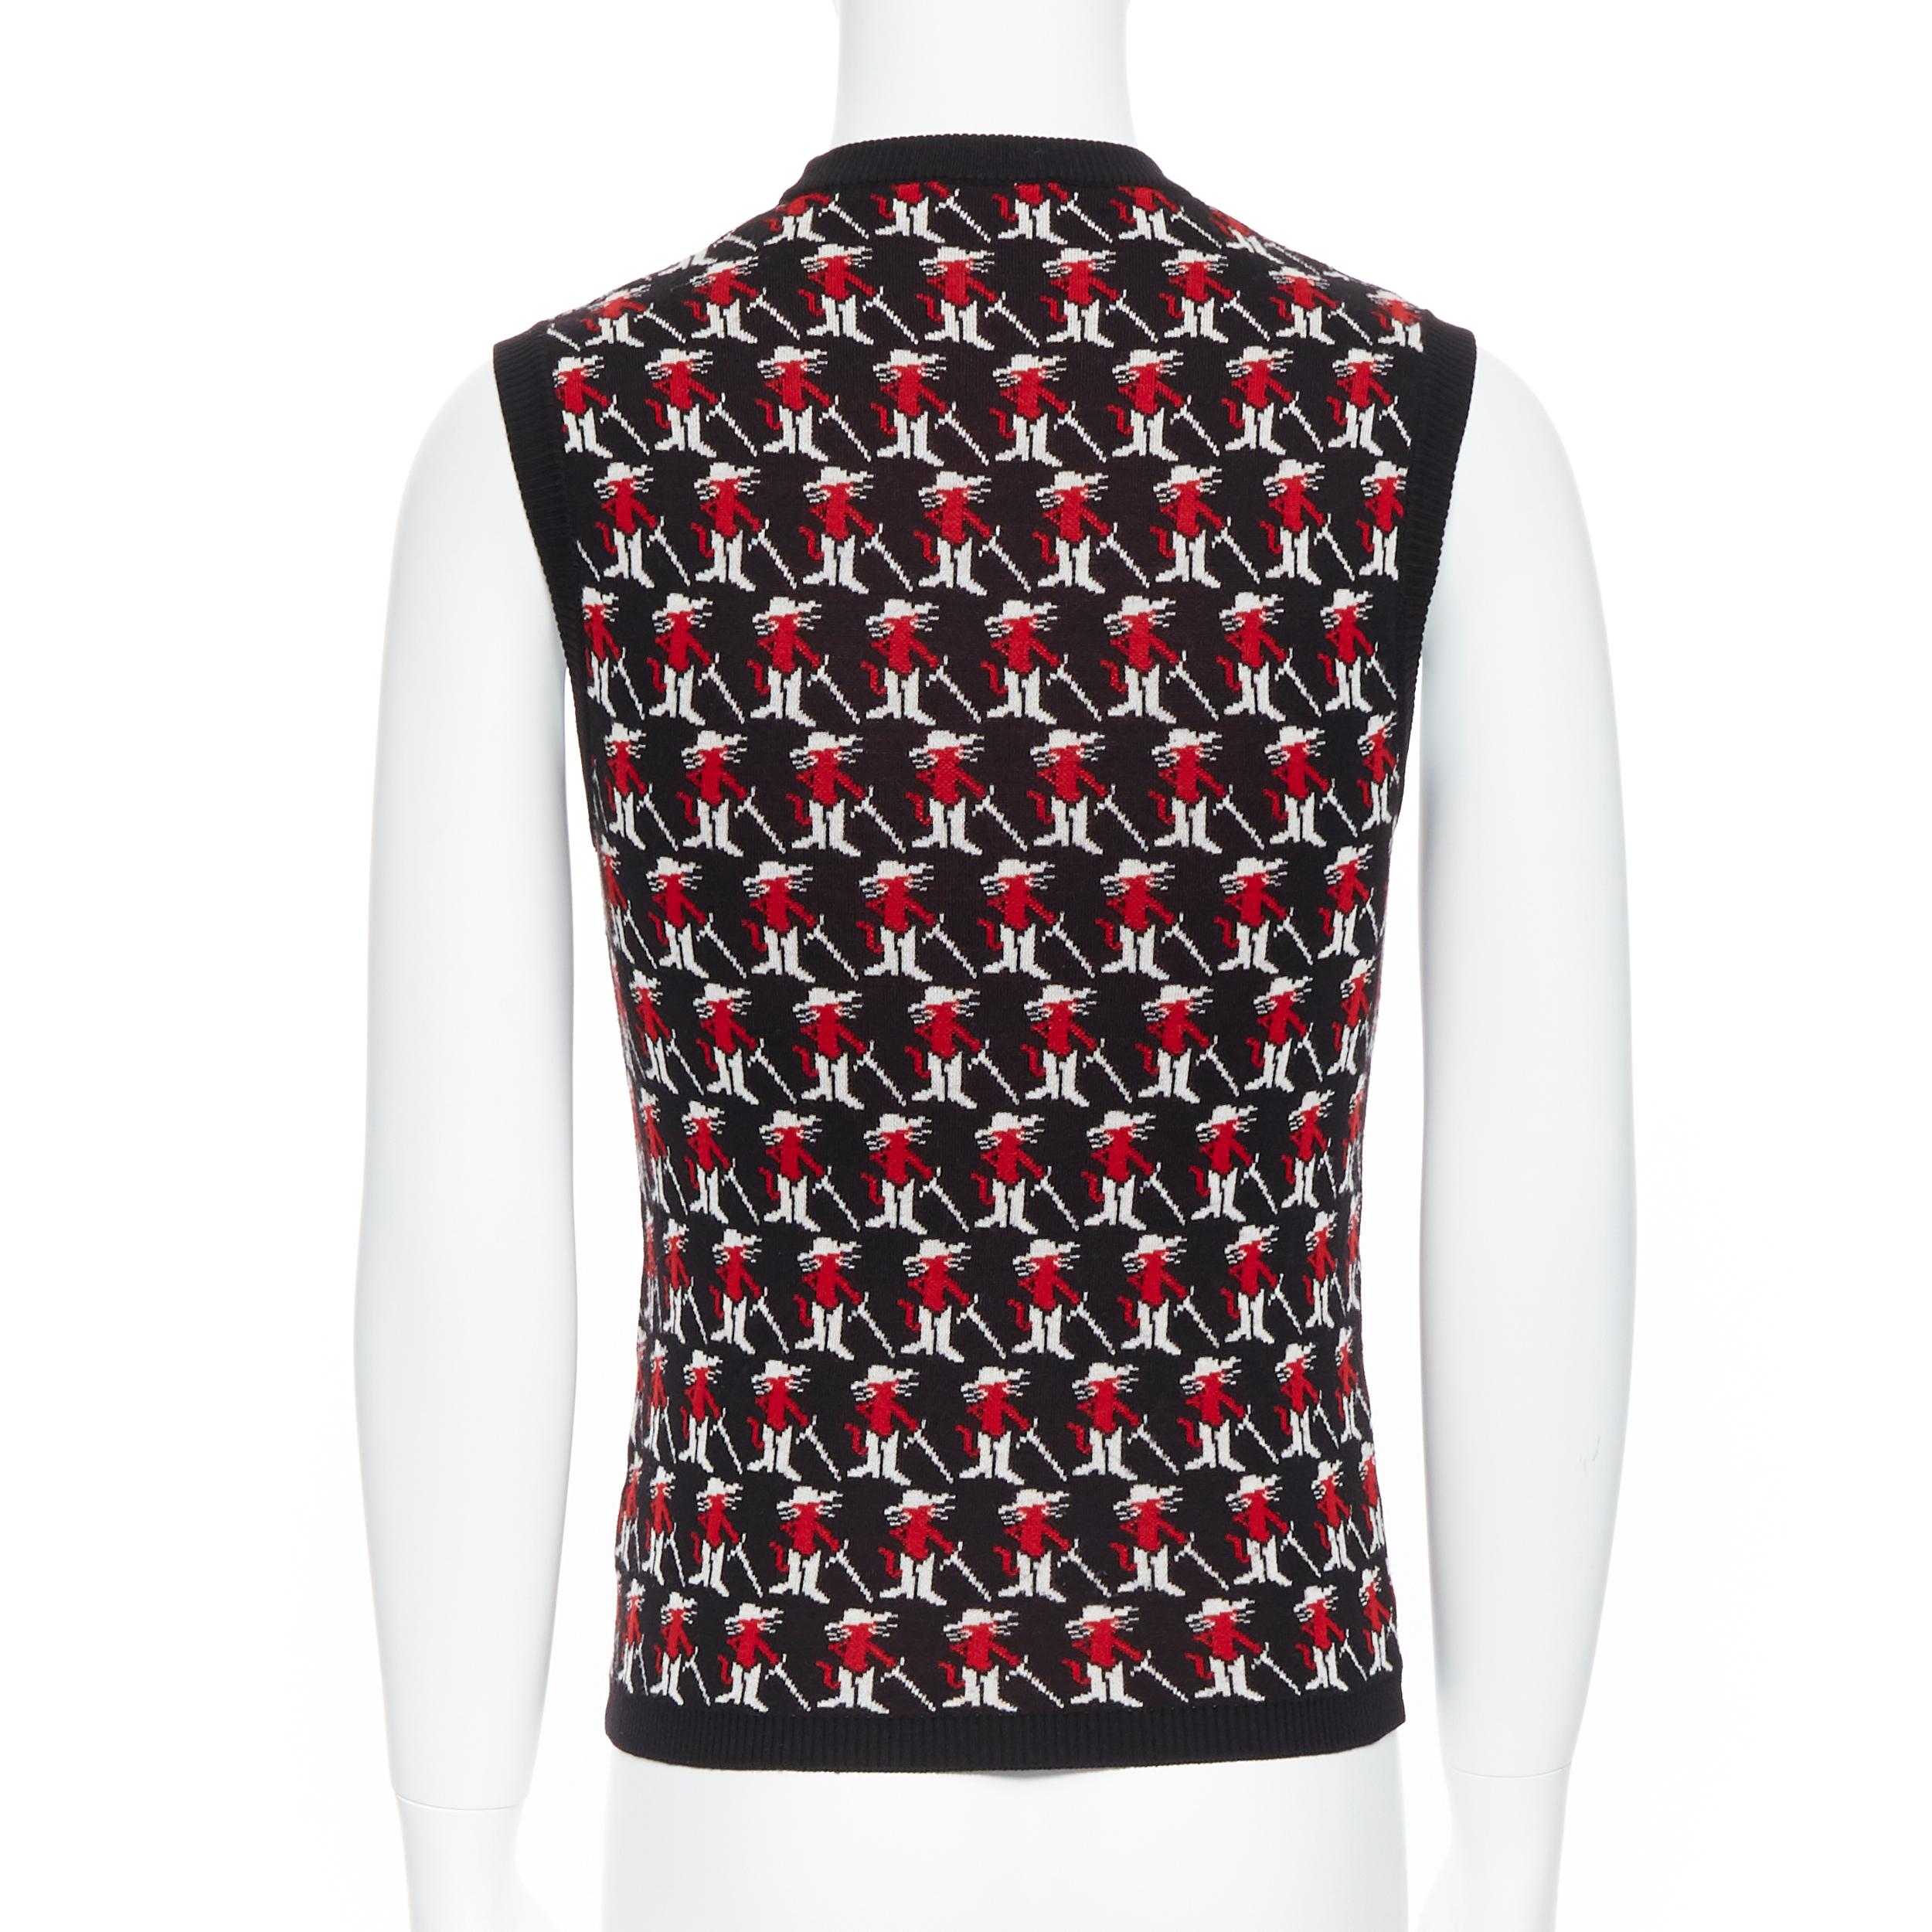 Black RAF SIMONS 100% merino wool red figurine knitted sleeveless sweater vest S